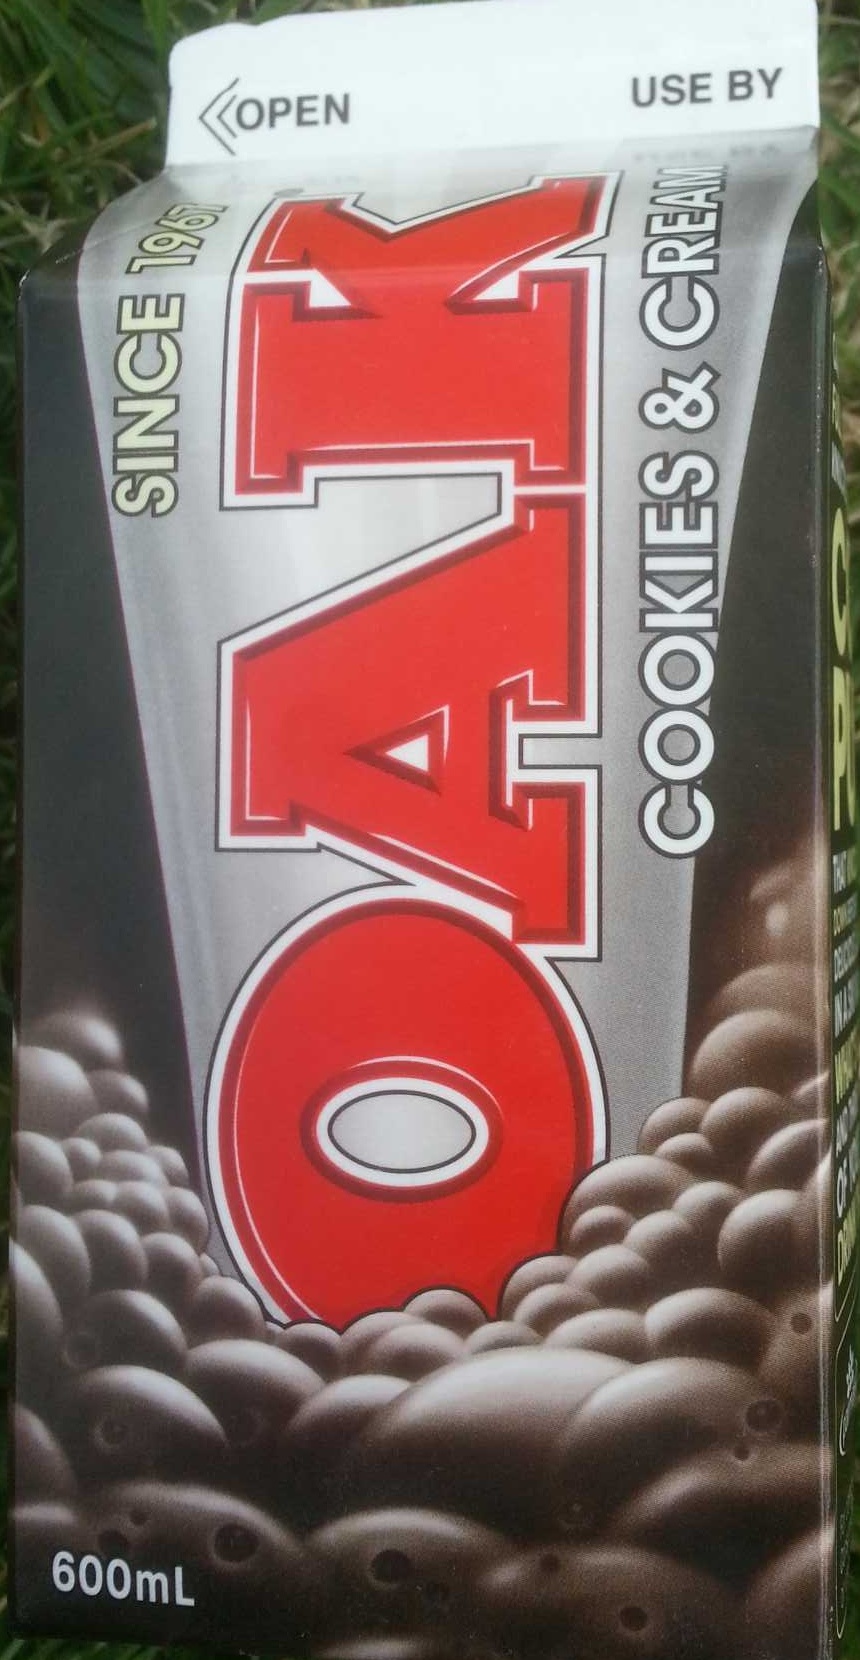 OAK Cookies & Cream - Product